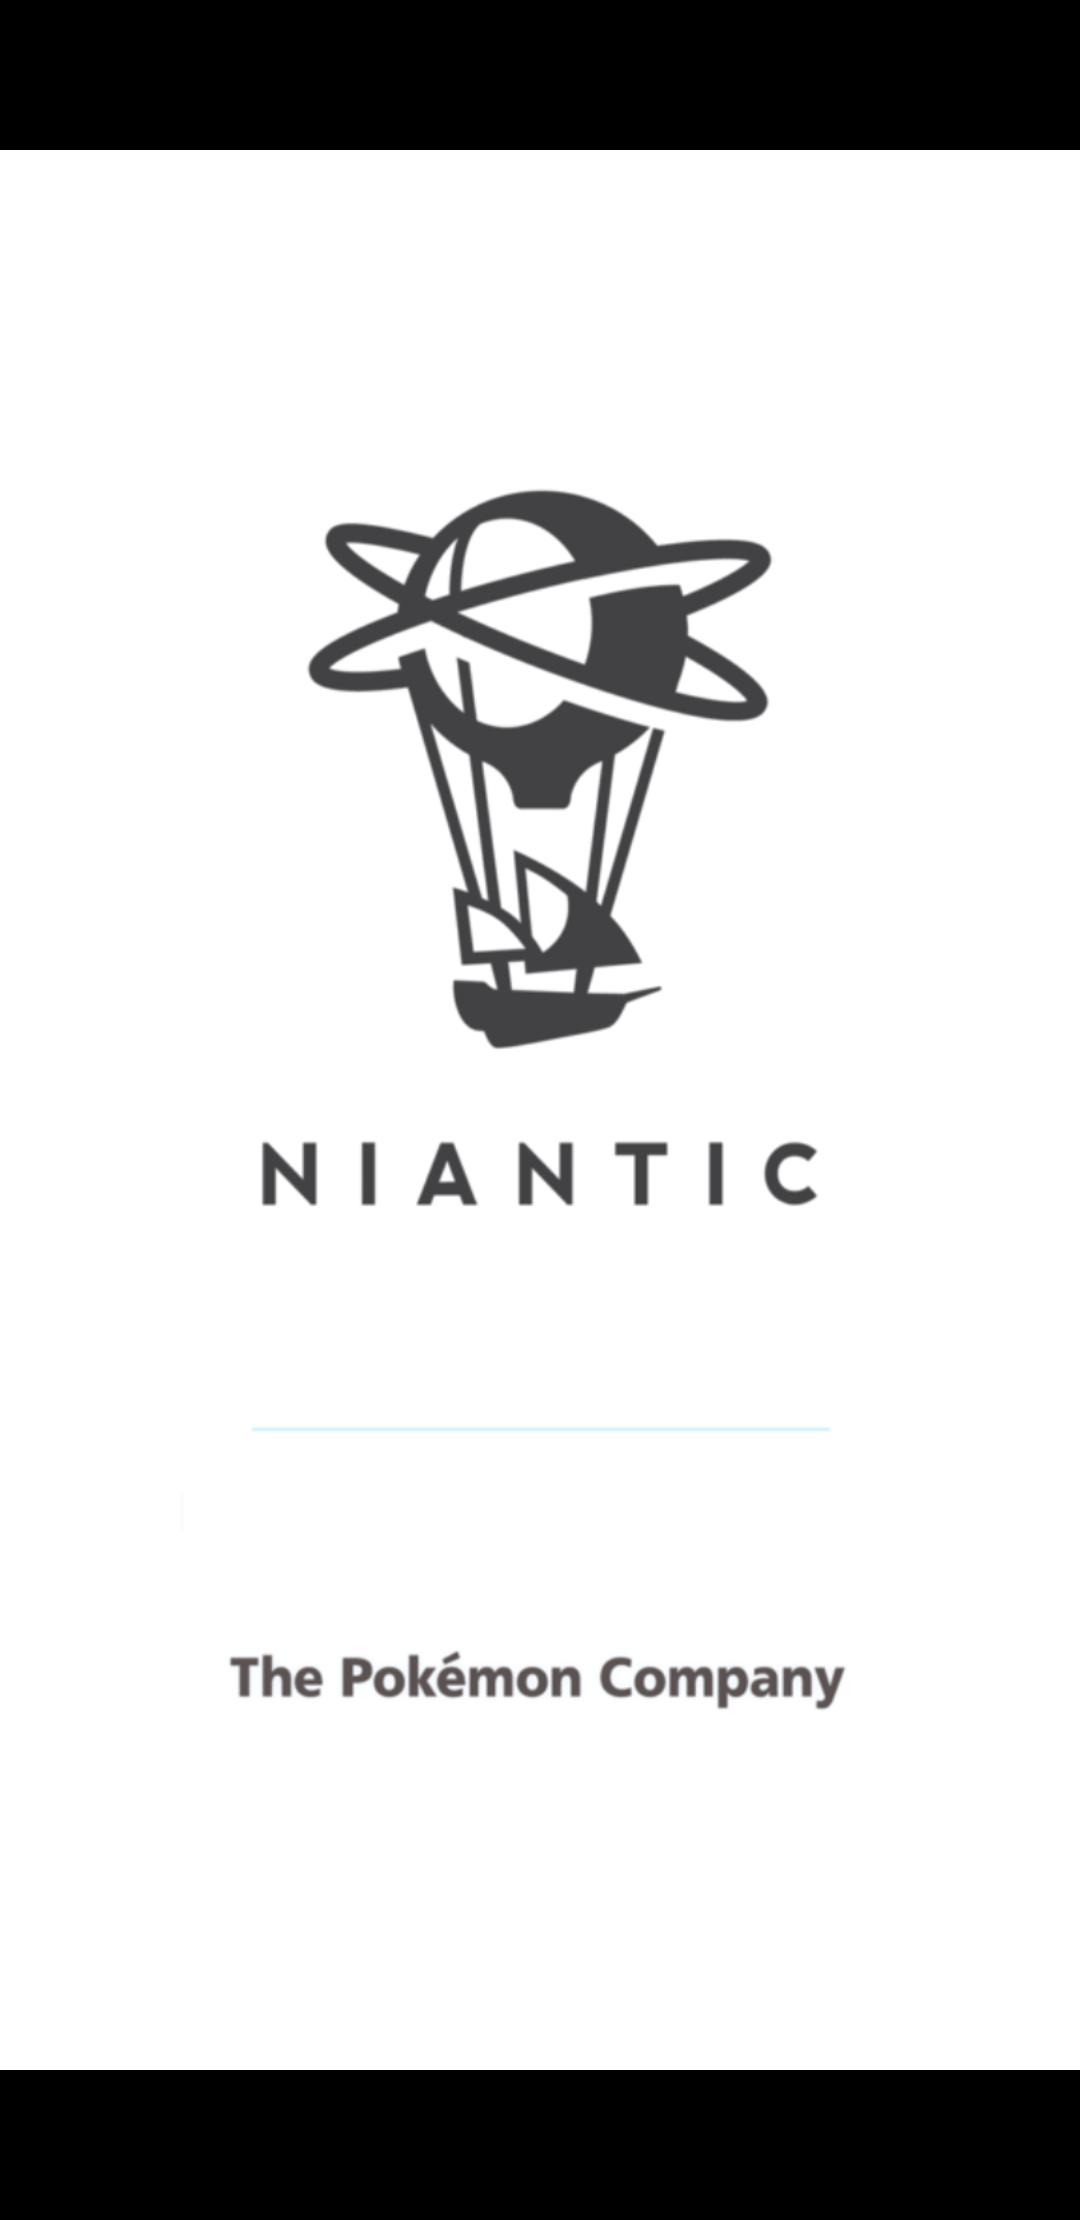 Niantic Logo Vector PNG - 101858